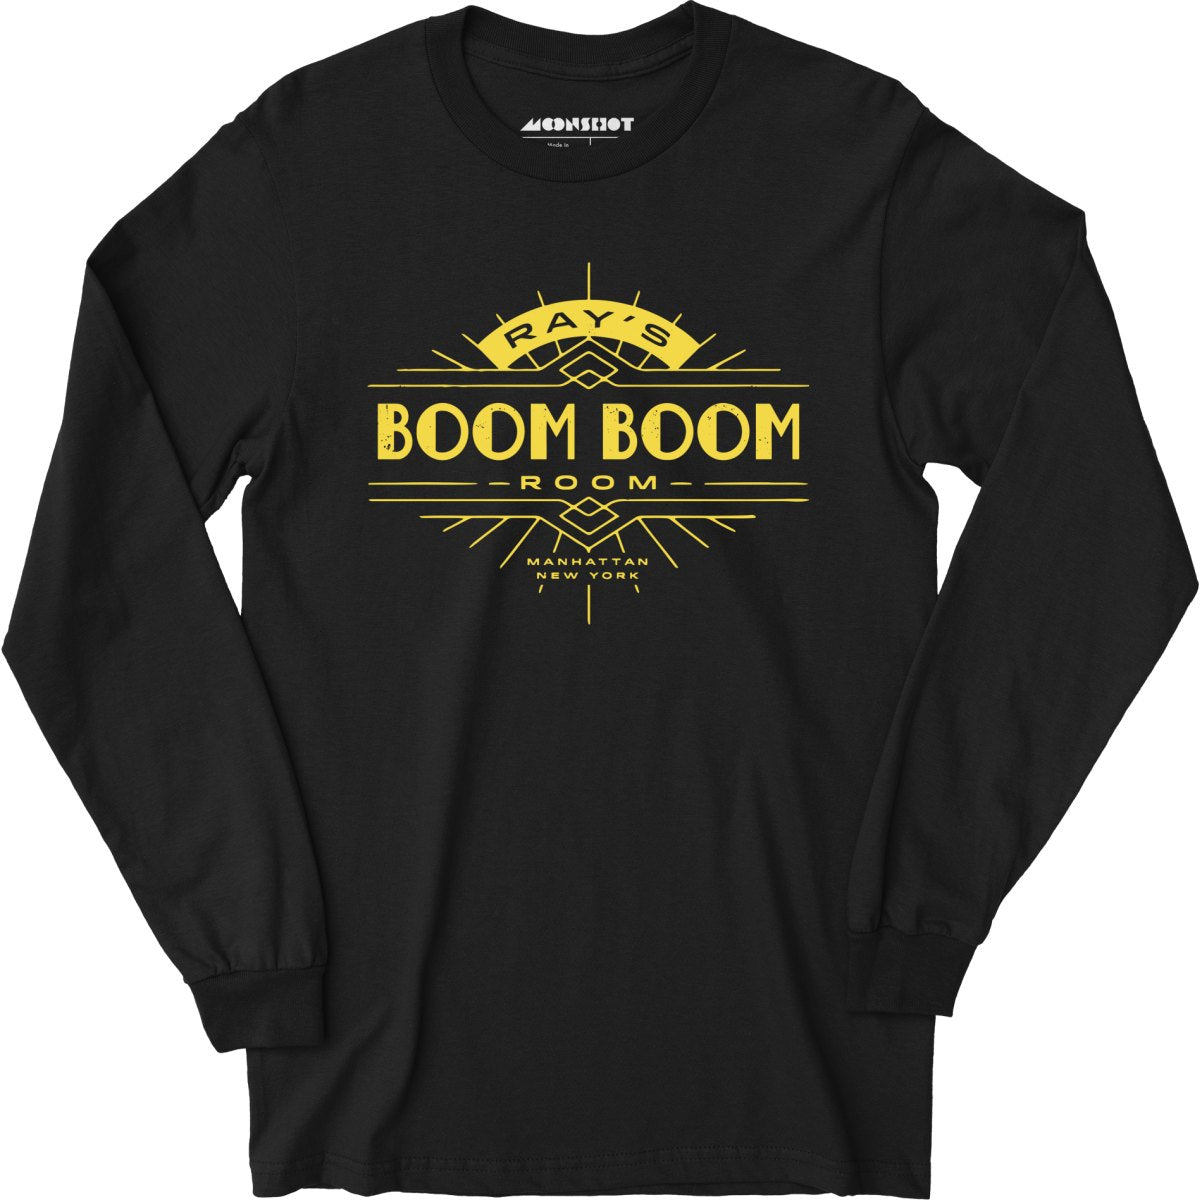 Ray's Boom Boom Room - Long Sleeve T-Shirt